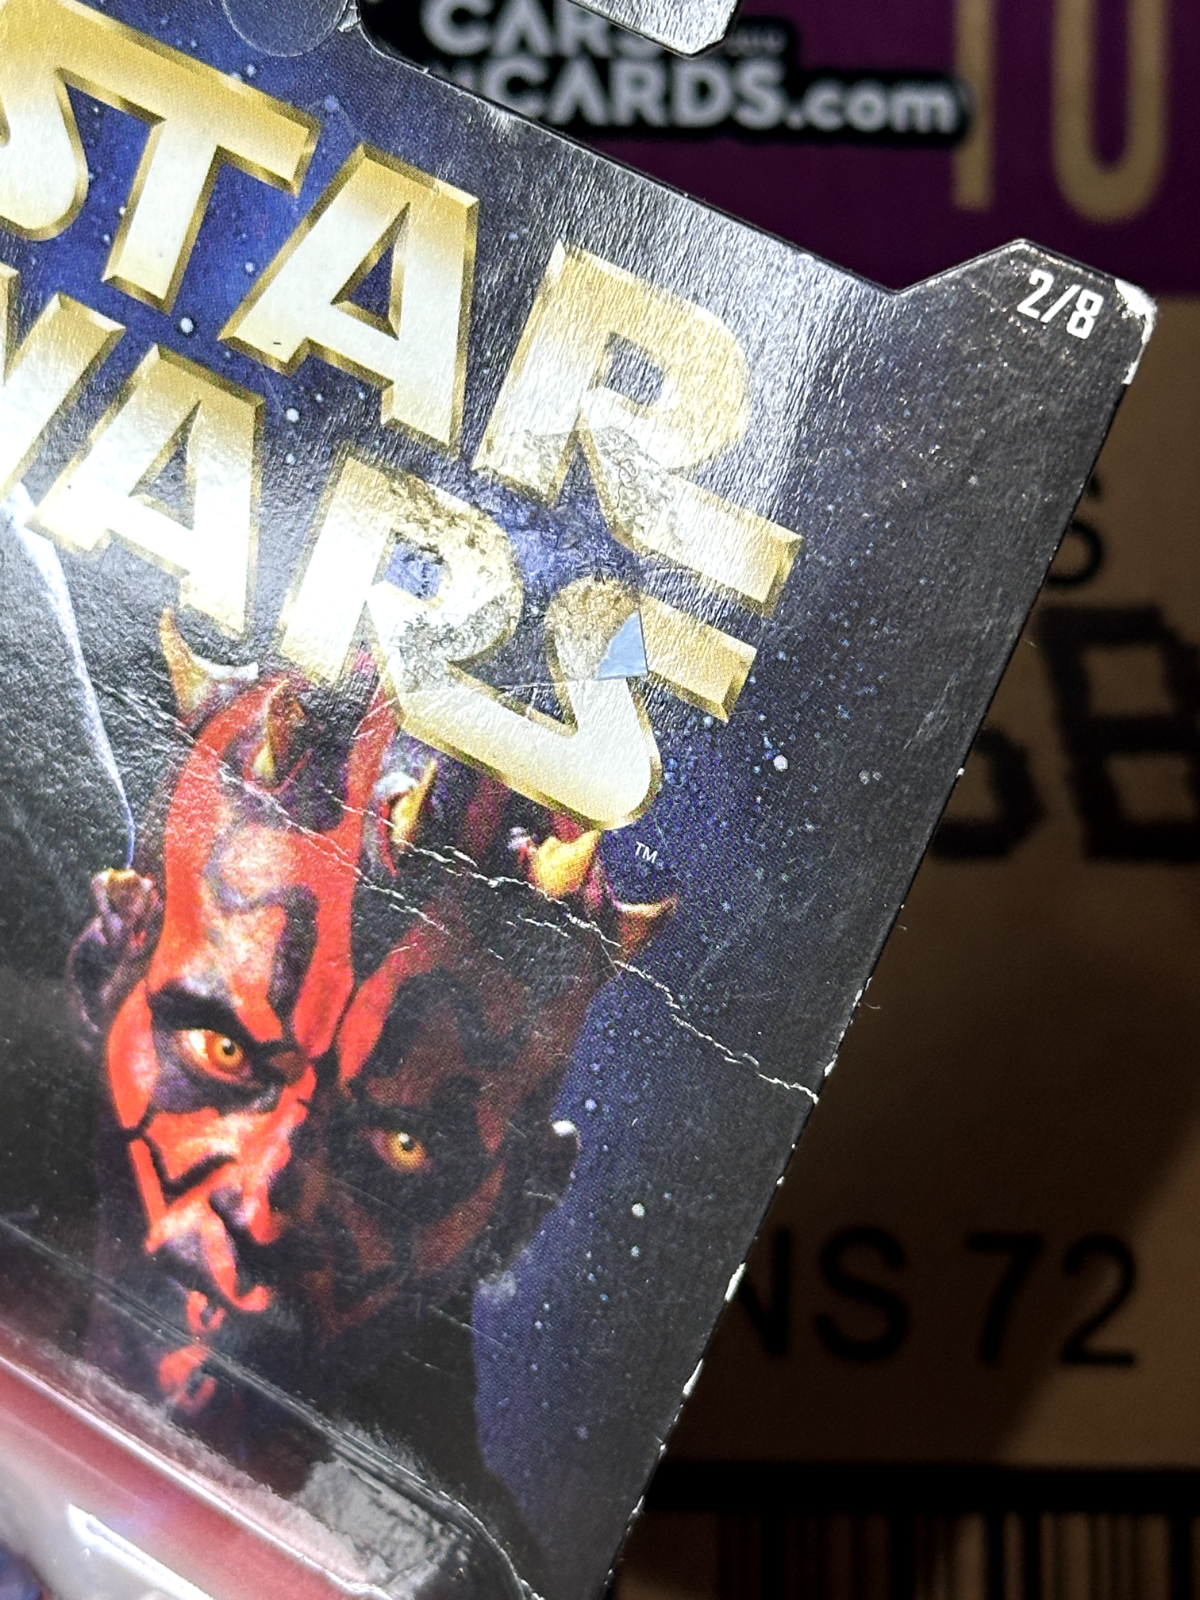 2018 Hot Wheels Star Wars Asphalt Assault Dark Maul & Darth Sidious Card Crease